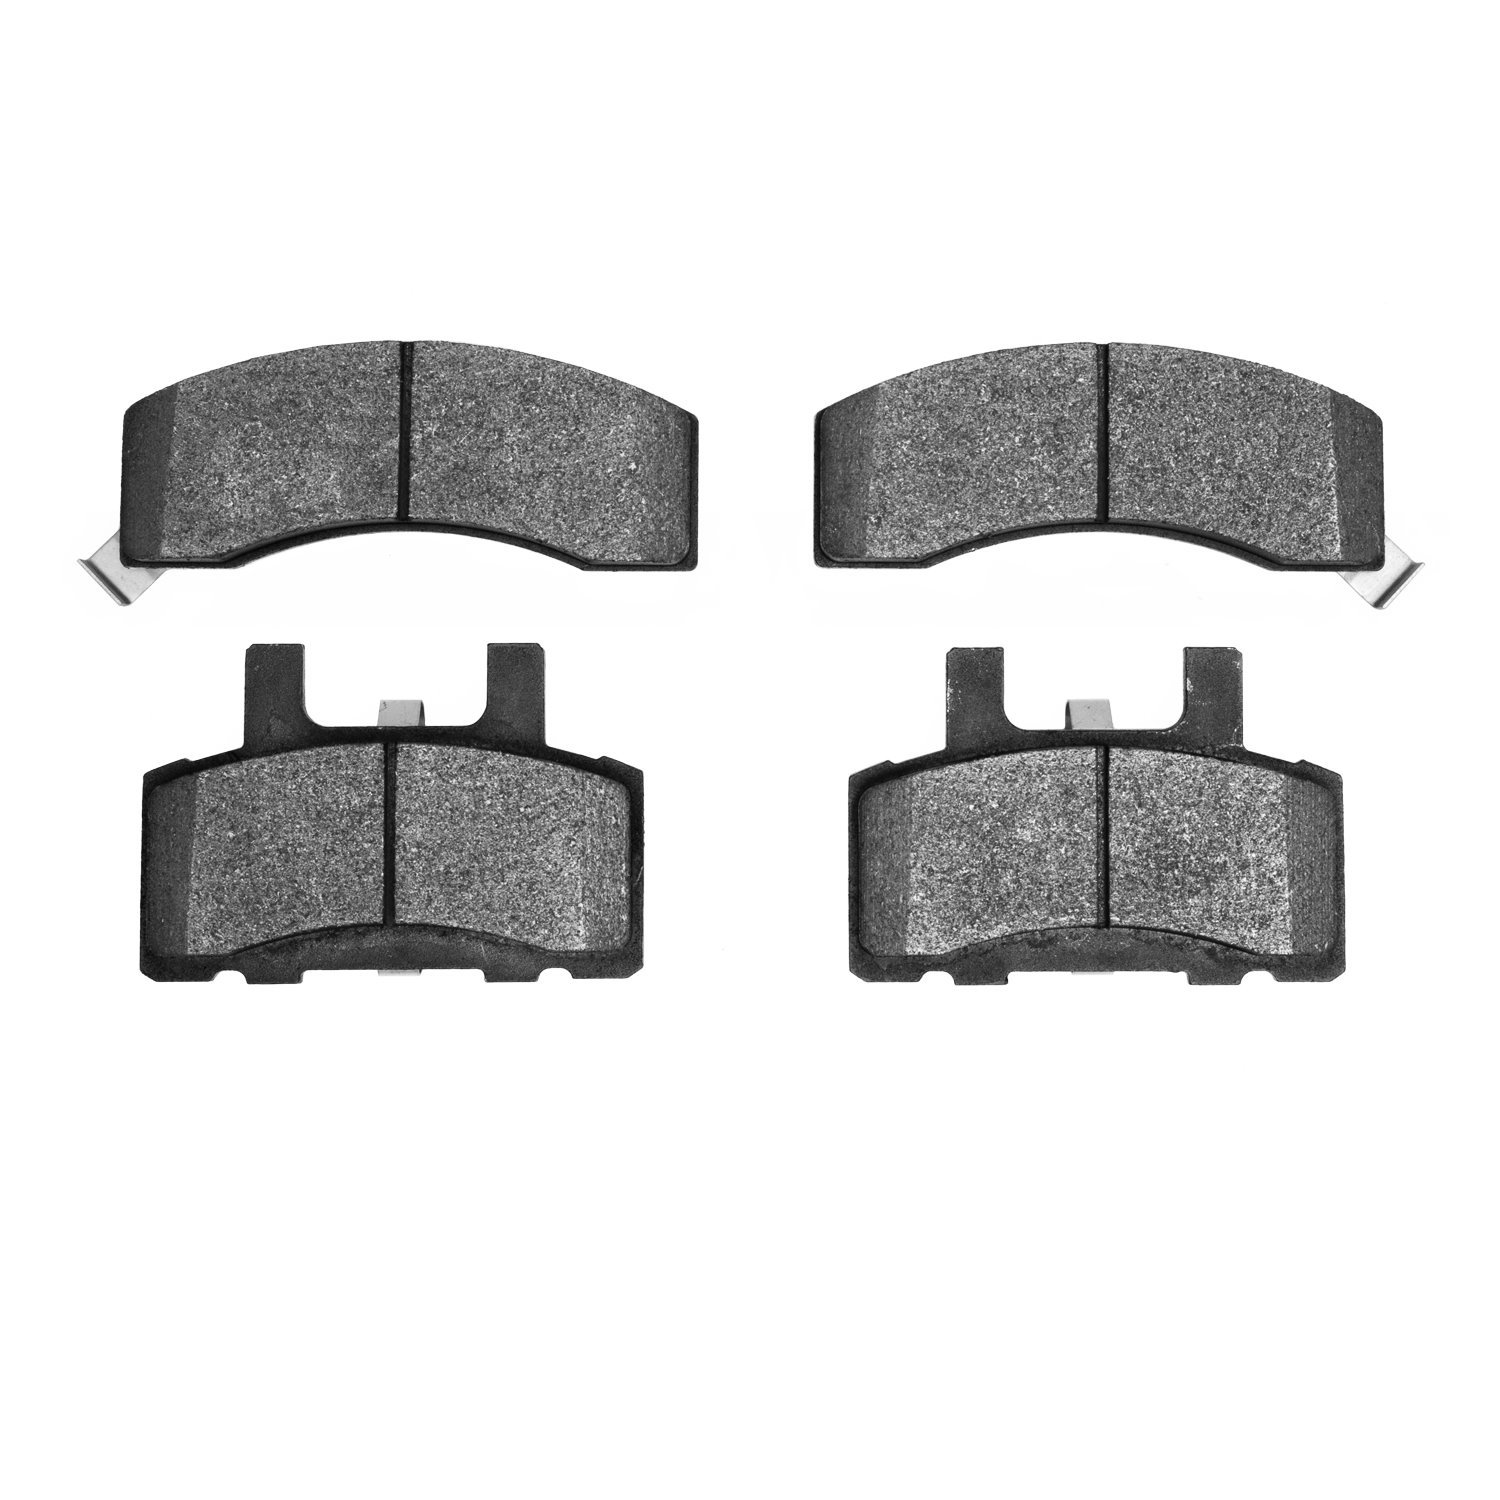 1310-0370-00 3000-Series Ceramic Brake Pads, 1988-2002 Multiple Makes/Models, Position: Front